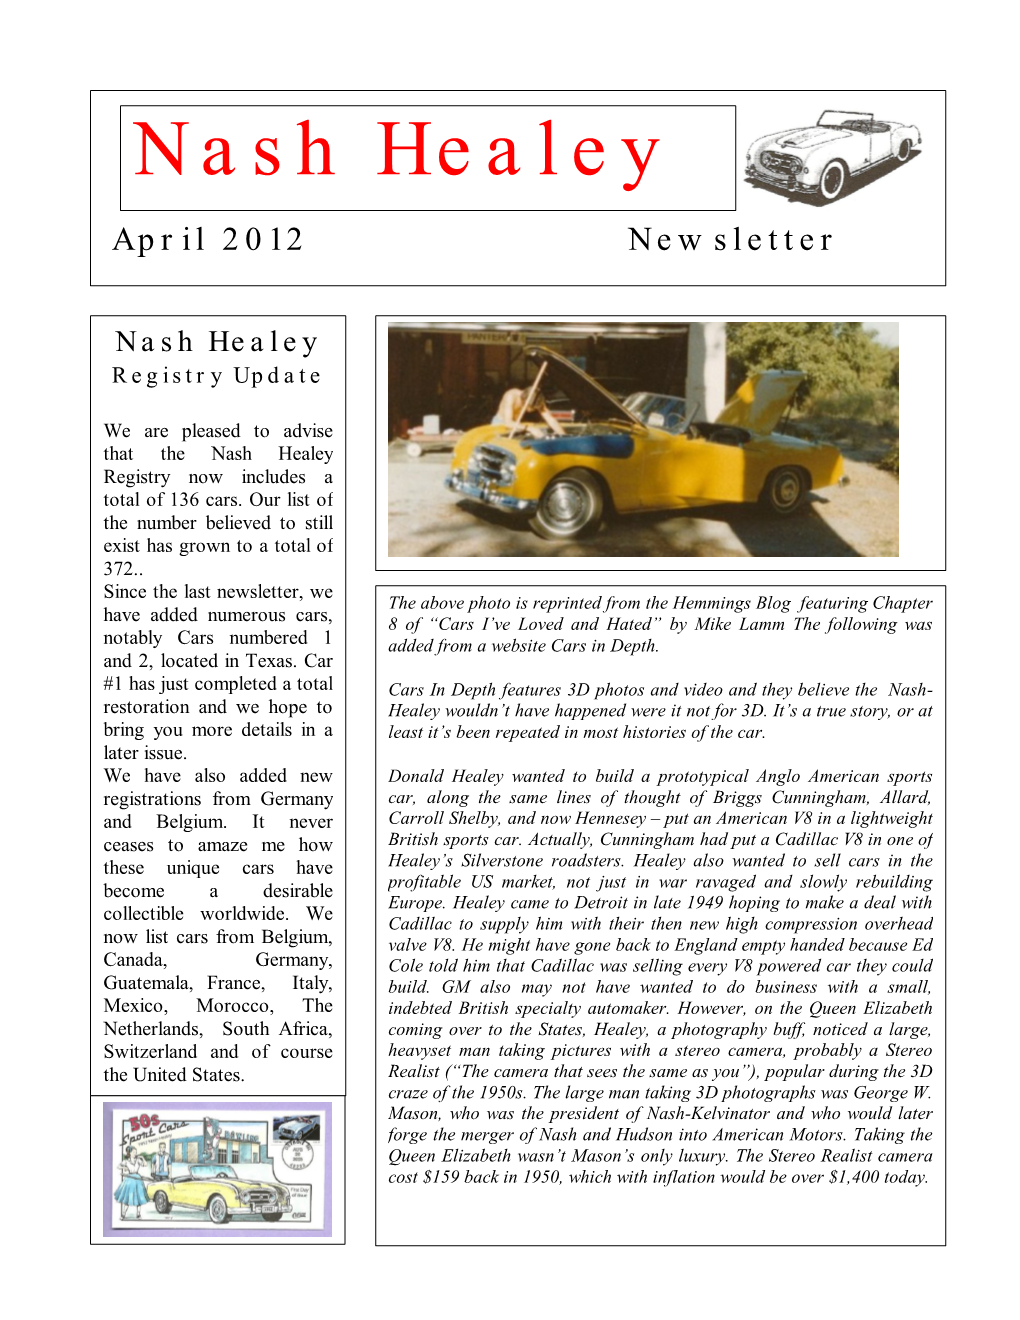 Nash Healey Registry Update